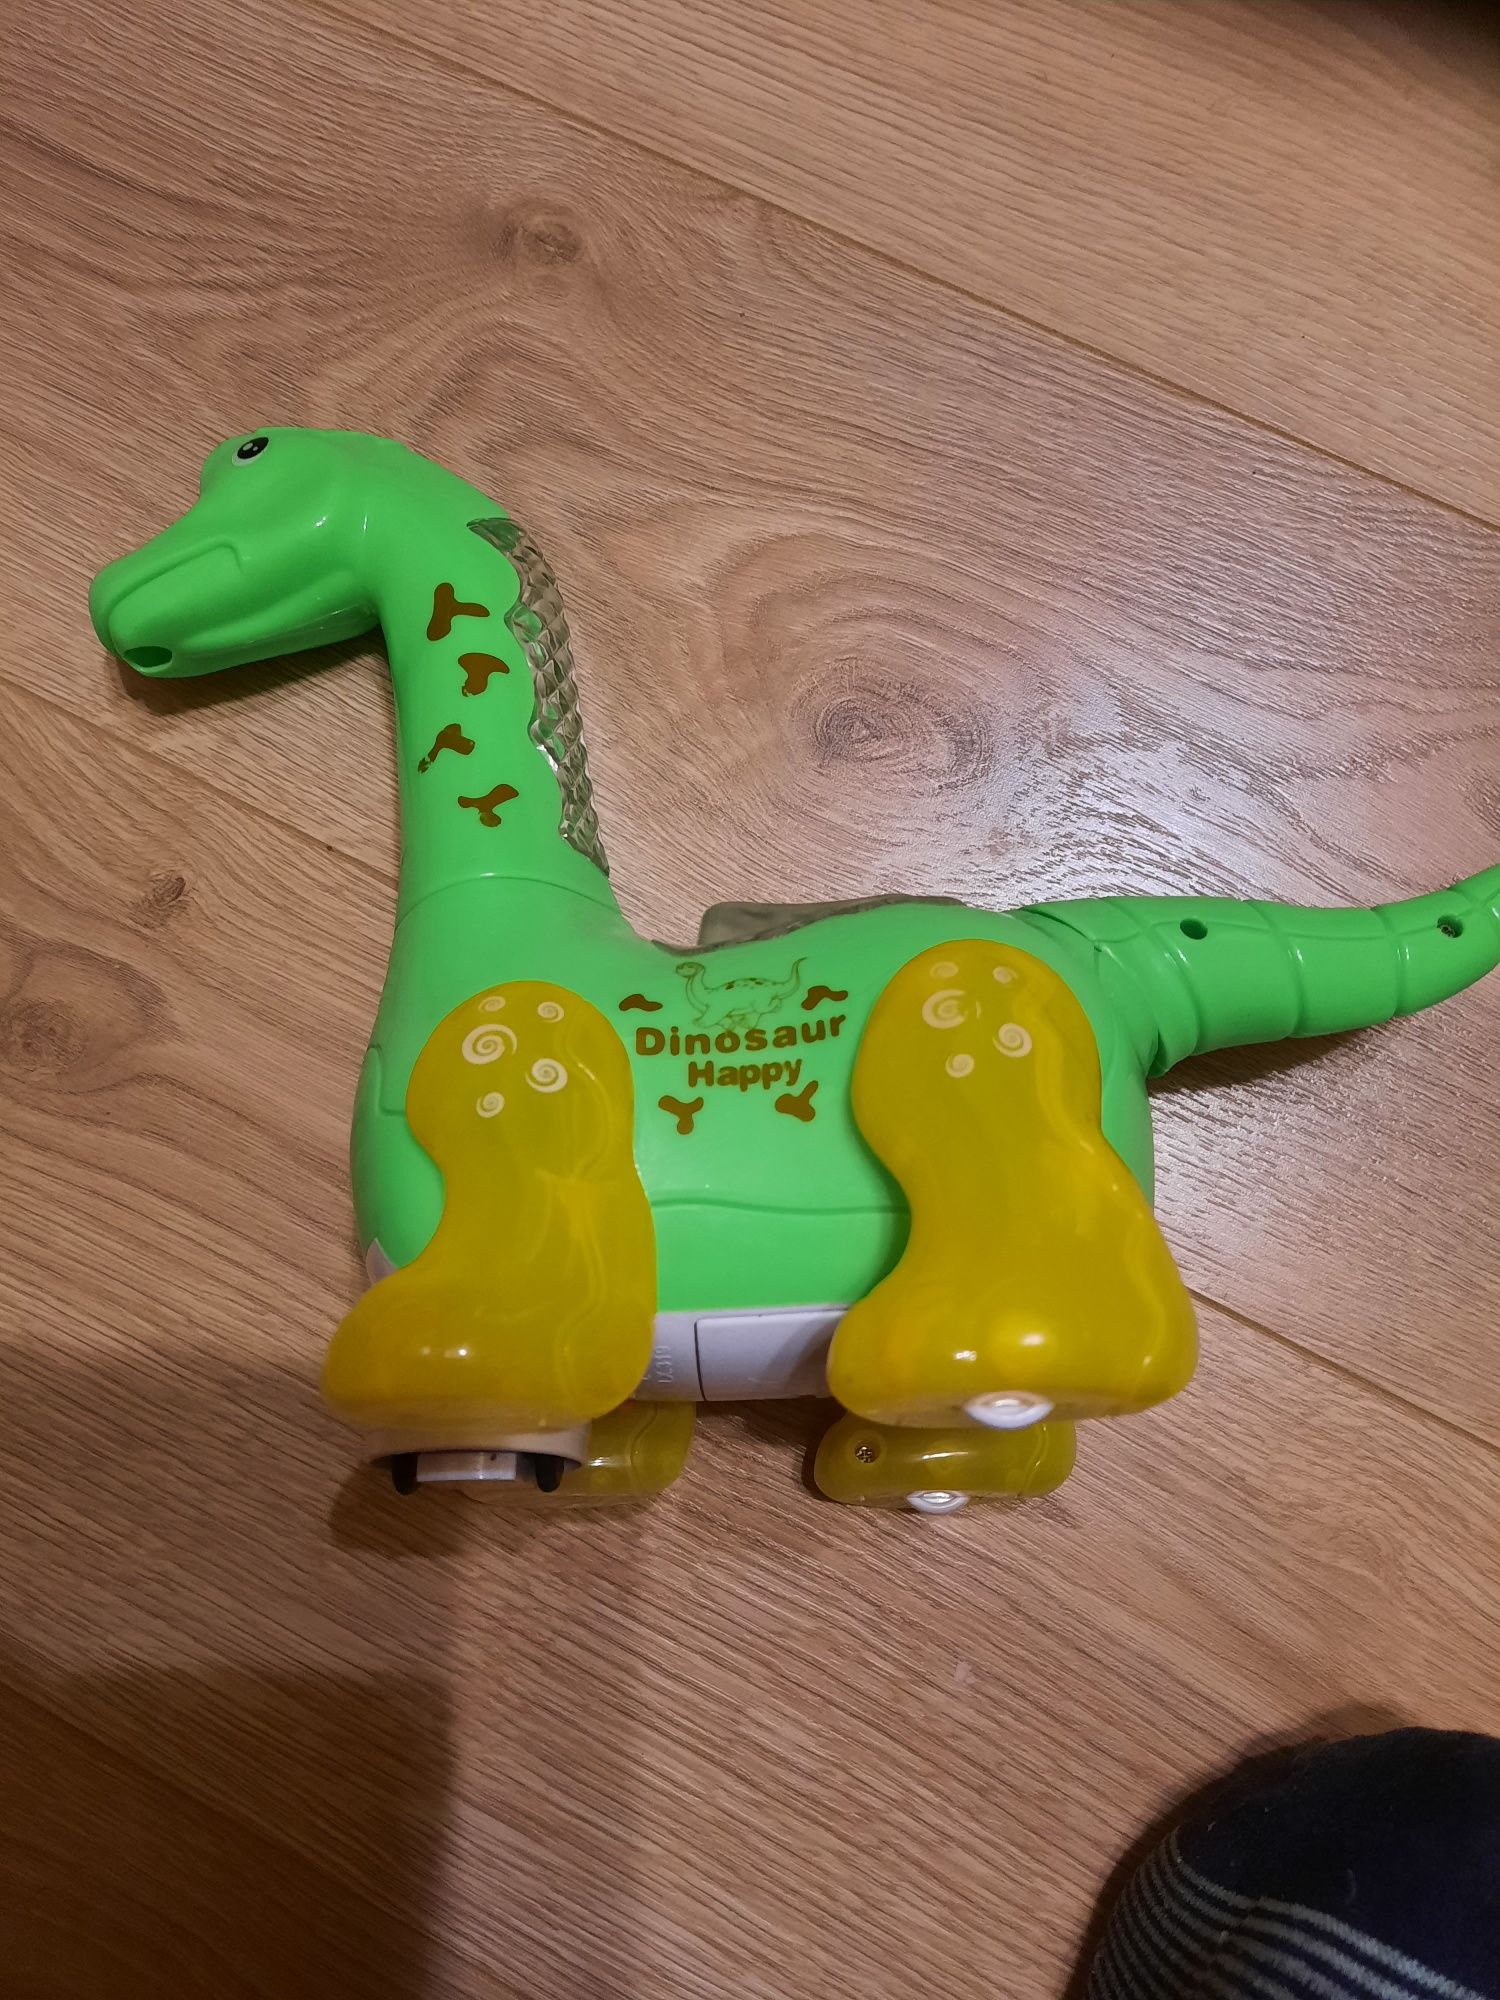 Dinozaur jezdzacy